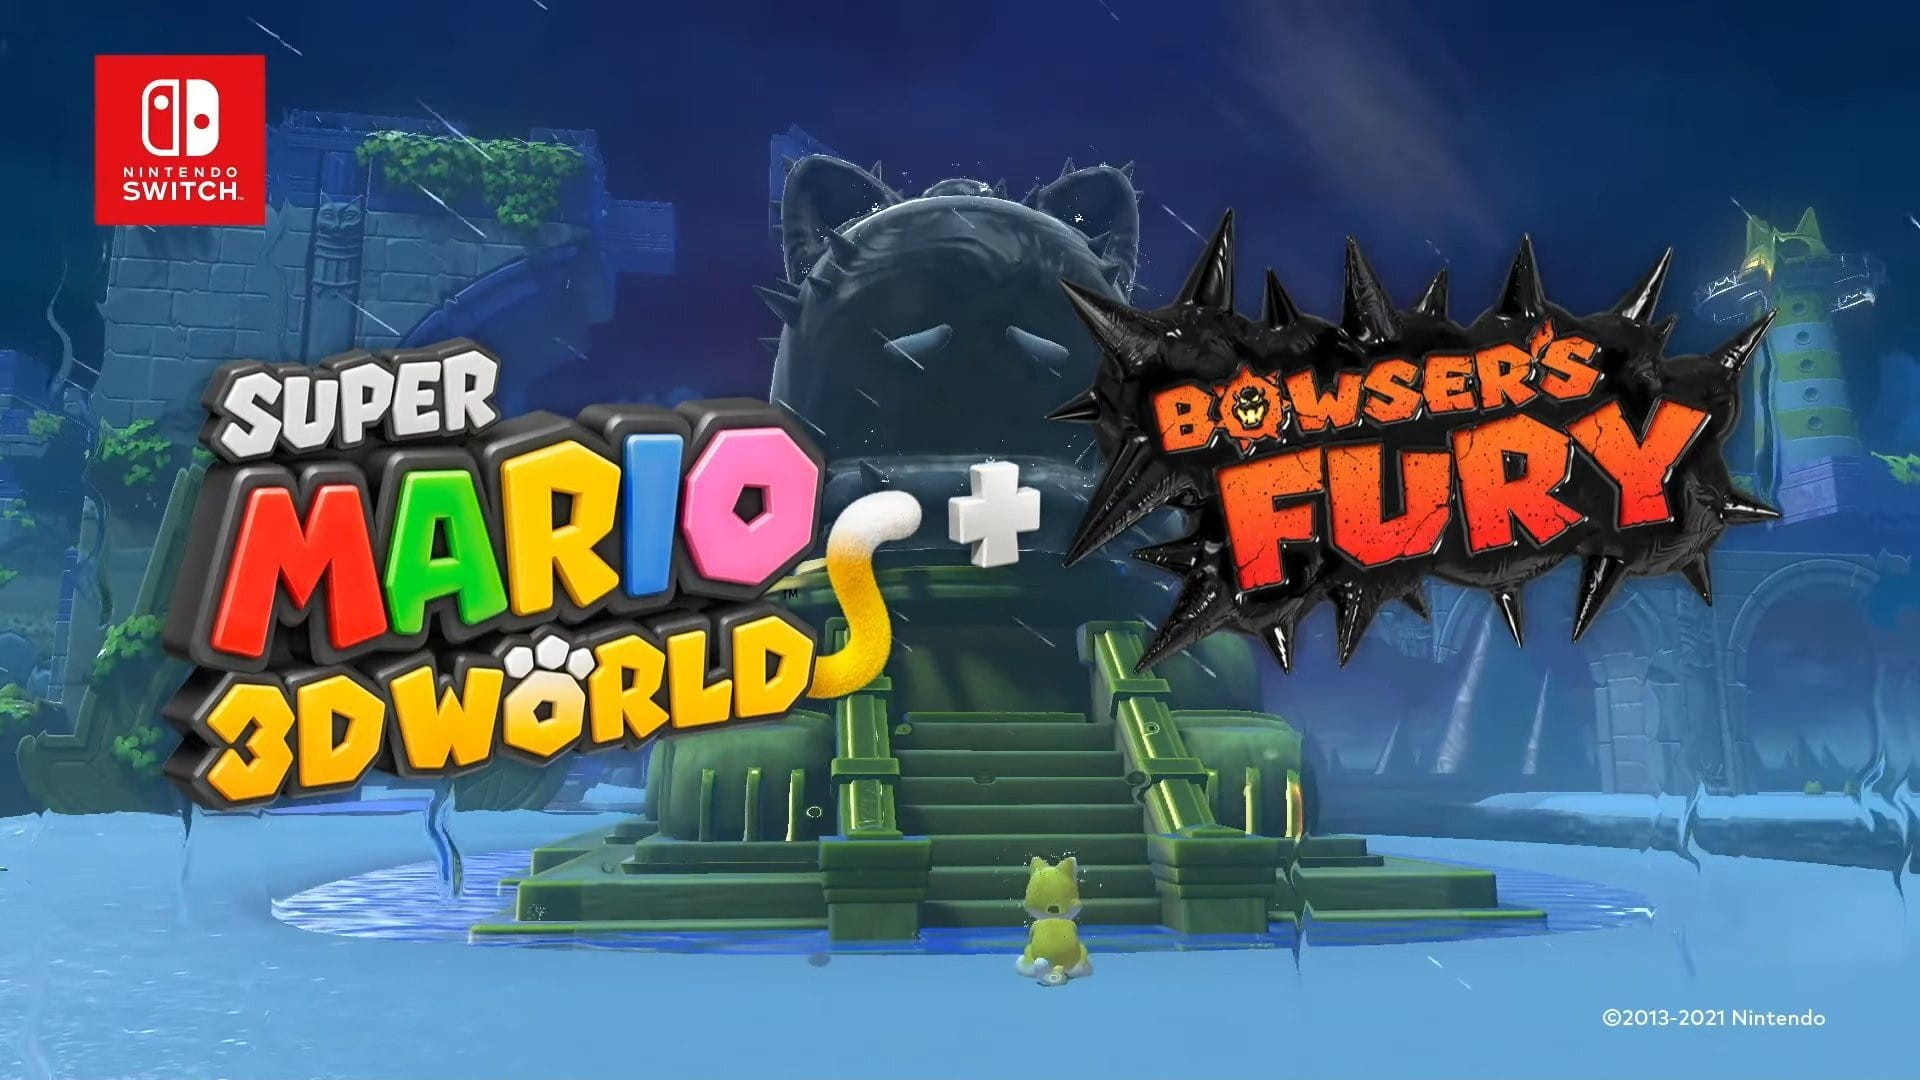 Super mario bowser fury. Super Mario 3 d World Bowser s Fury. Super Mario 3d World + Bowser's Fury. Super Mario 3d World + Bowser’s Fury(2021). Super Mario 3d World Bowser's Fury Nintendo Switch.